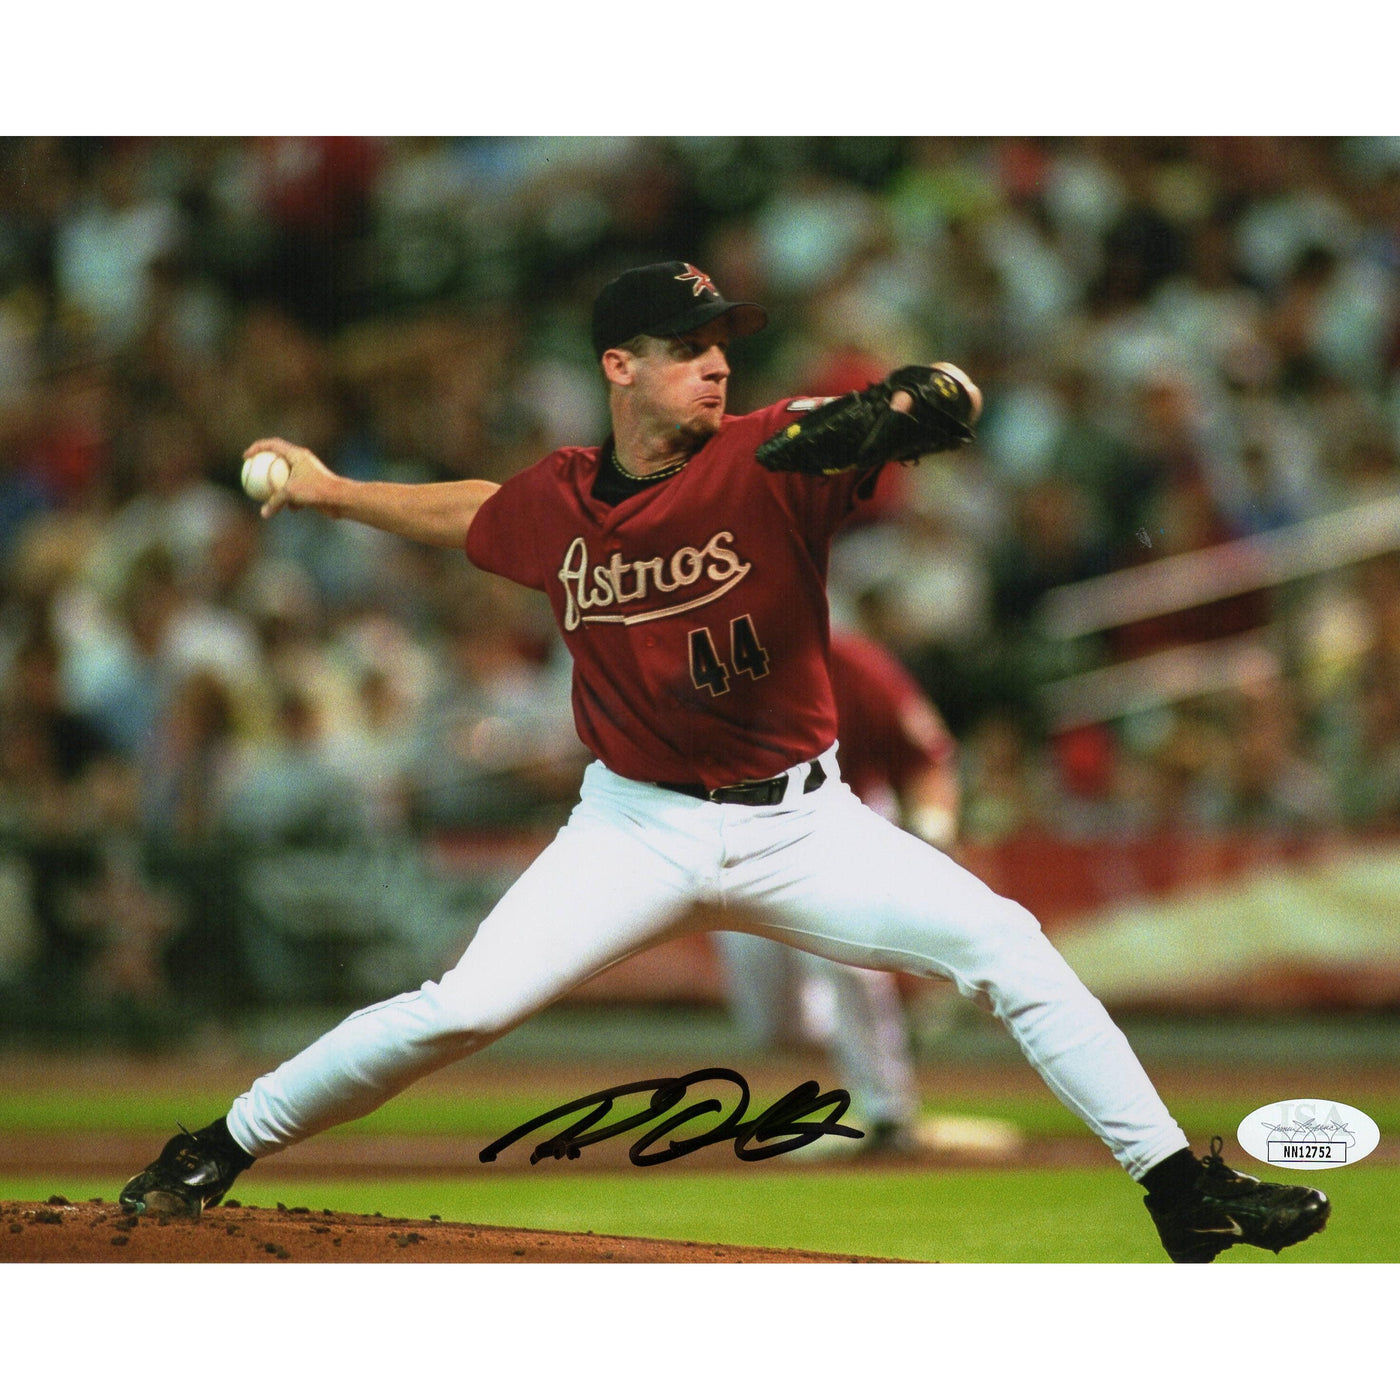 Roy Oswalt Autograph 8x10 Photo Houston Astros Pitcher Signed JSA COA 3